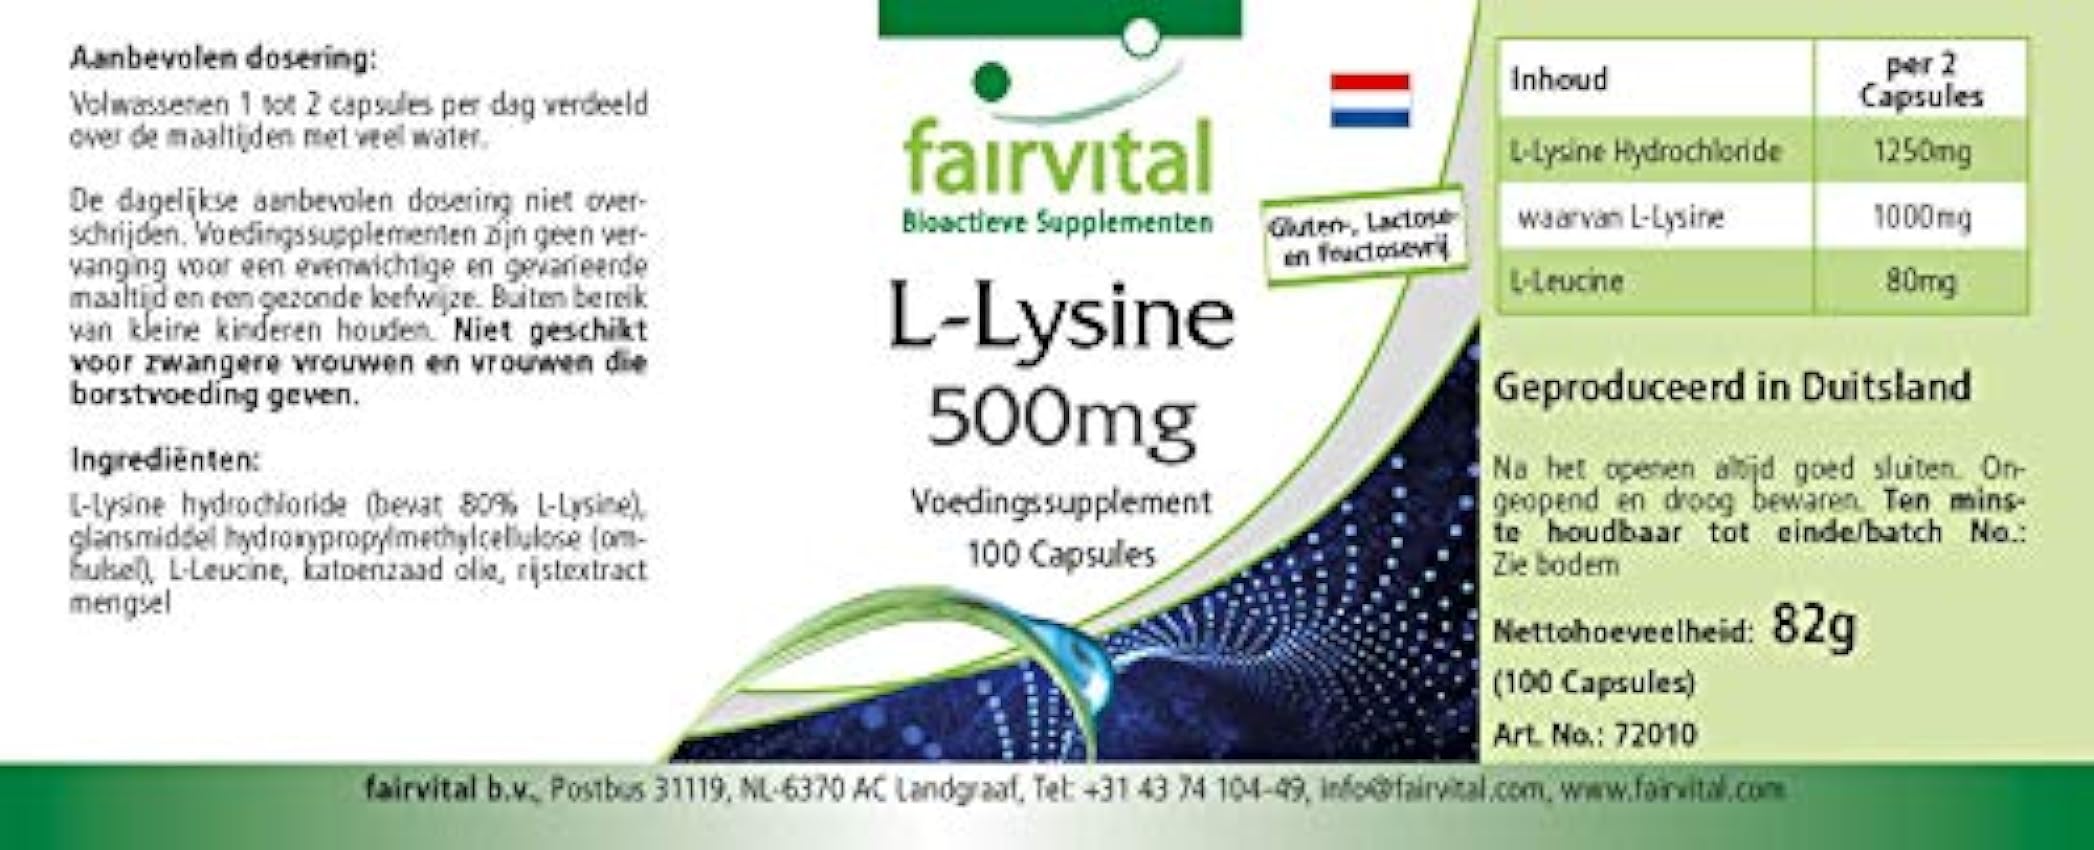 Fairvital | L-Lisina 500mg - Dosis elevada - VEGANA - L-Lisina HCl - Aminoácido esencial - 100 Cápsulas - Calidad Alemana JeGLMmUg